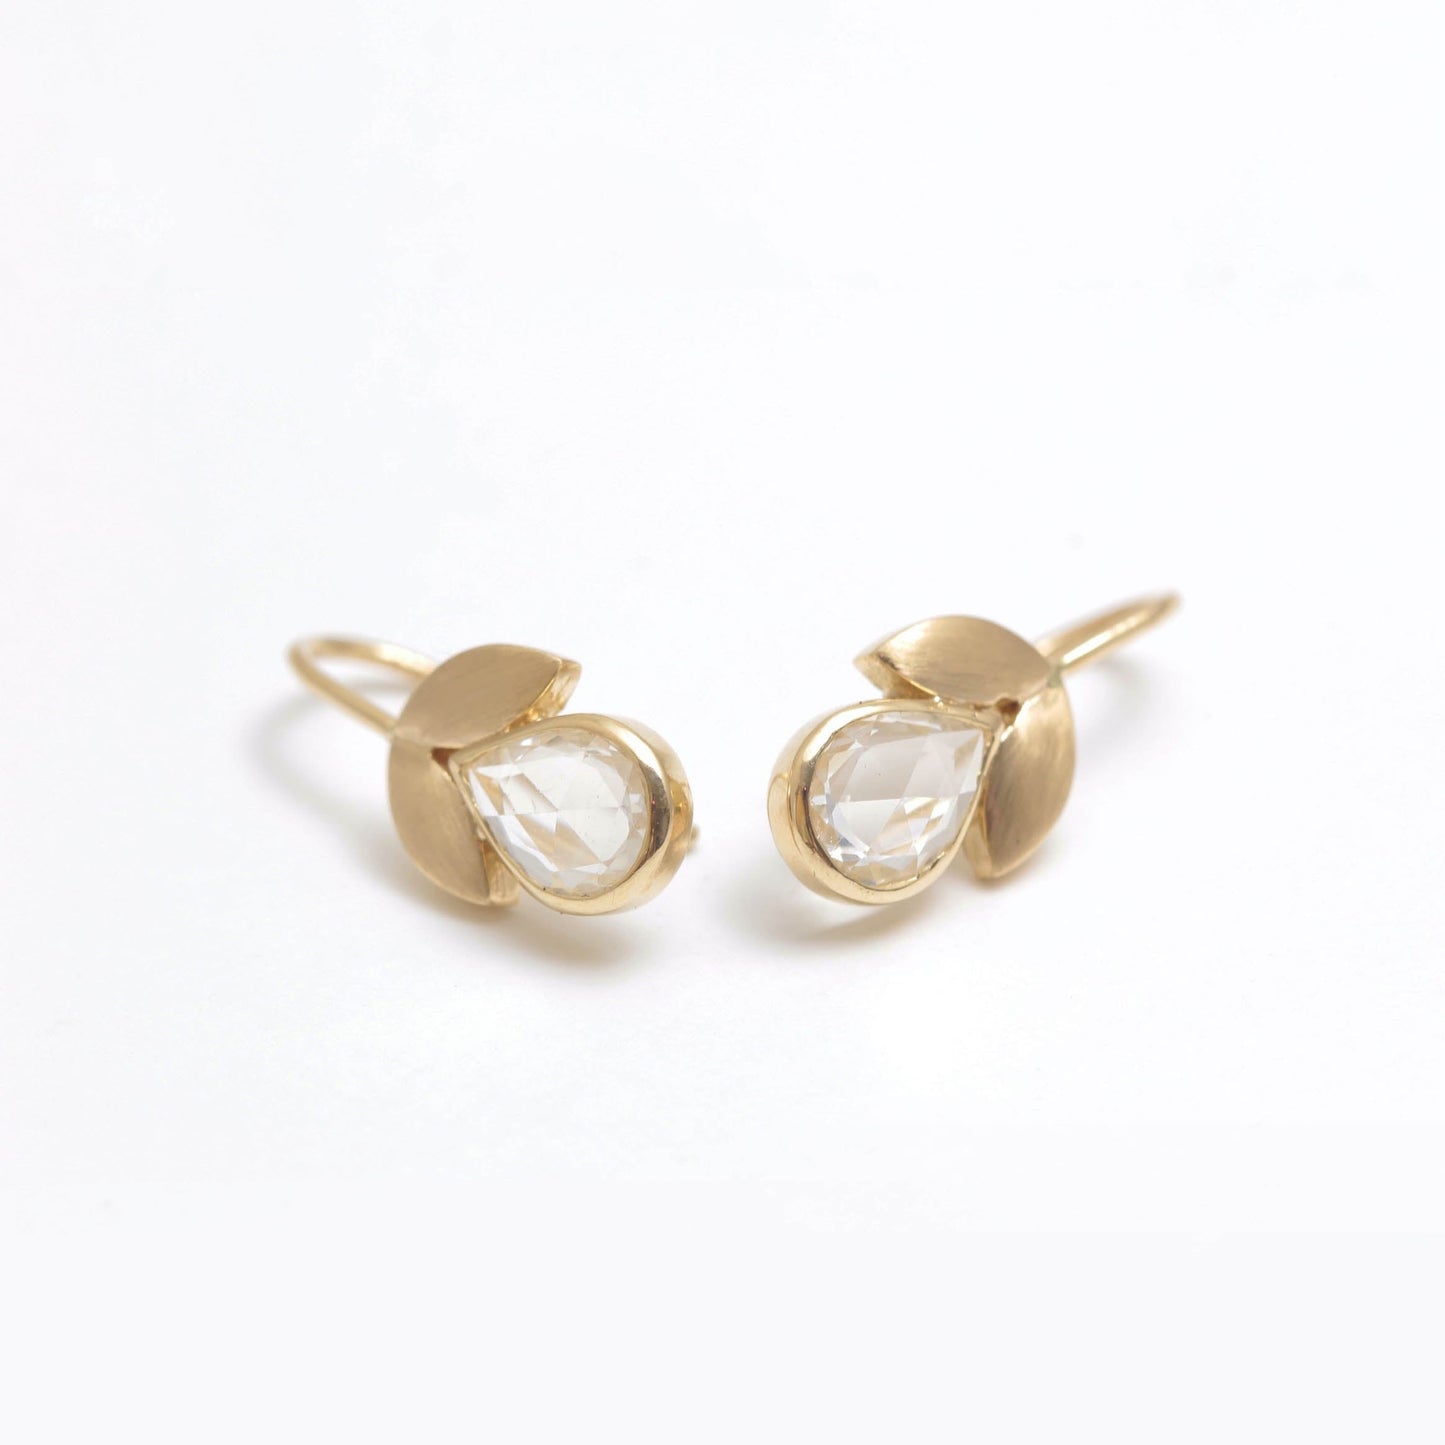 The Vani Gold and White Sapphire Hook Earrings by Rasvihar